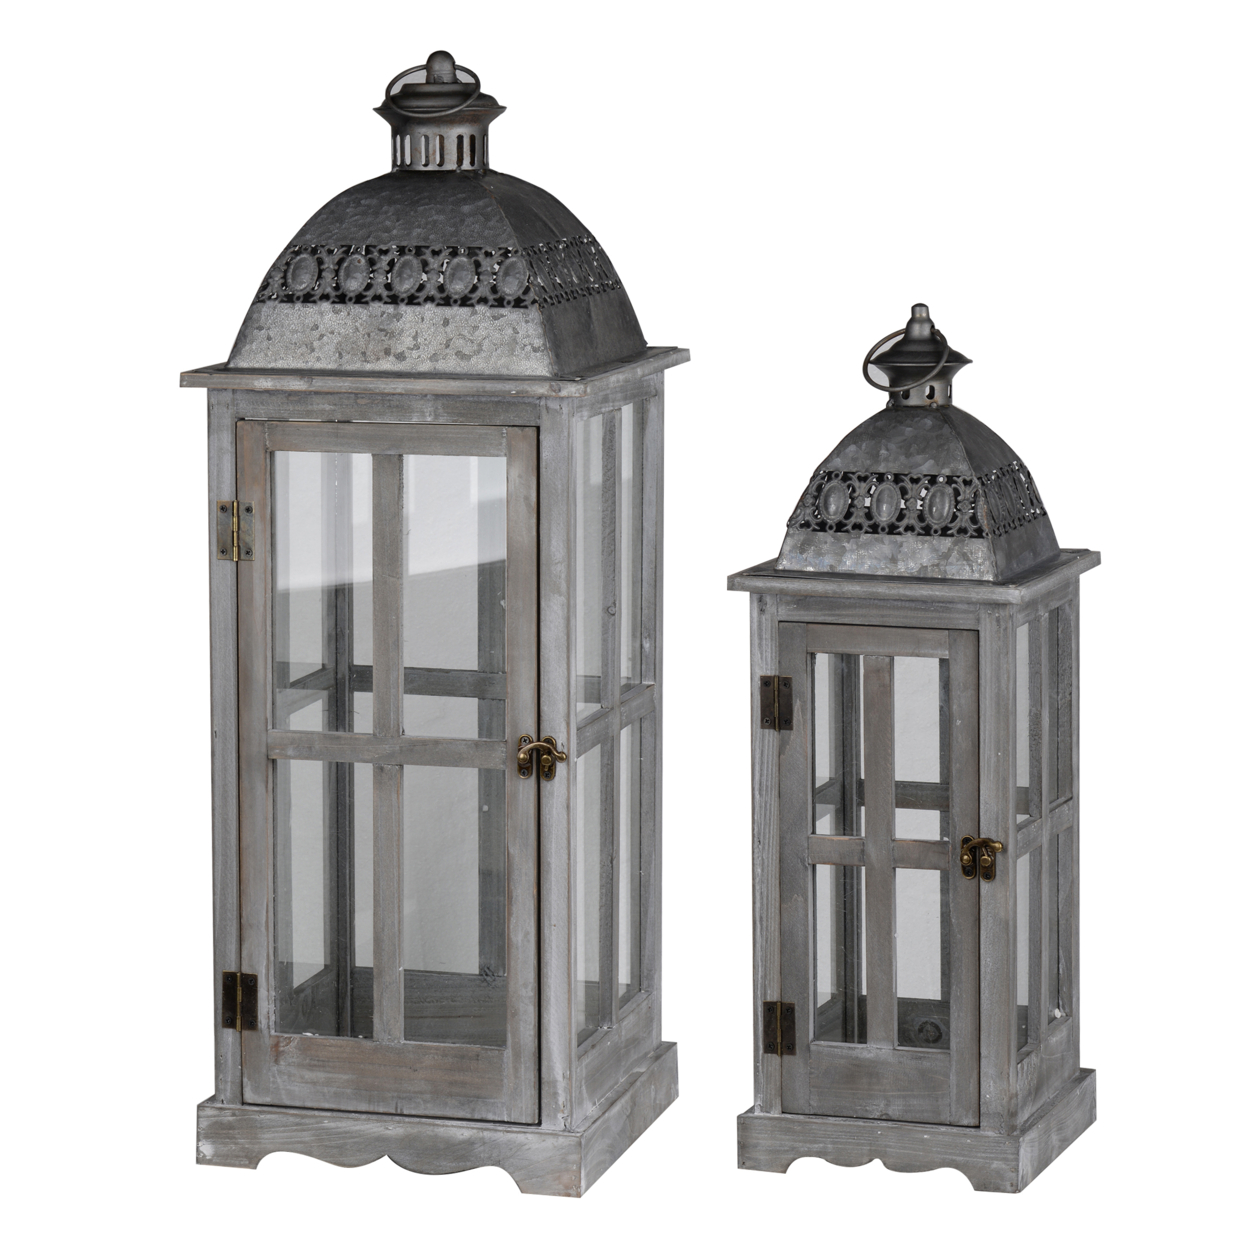 Wood And Metal Lanterns With Glass Window Pane Design, Gray, Set Of 2- Saltoro Sherpi